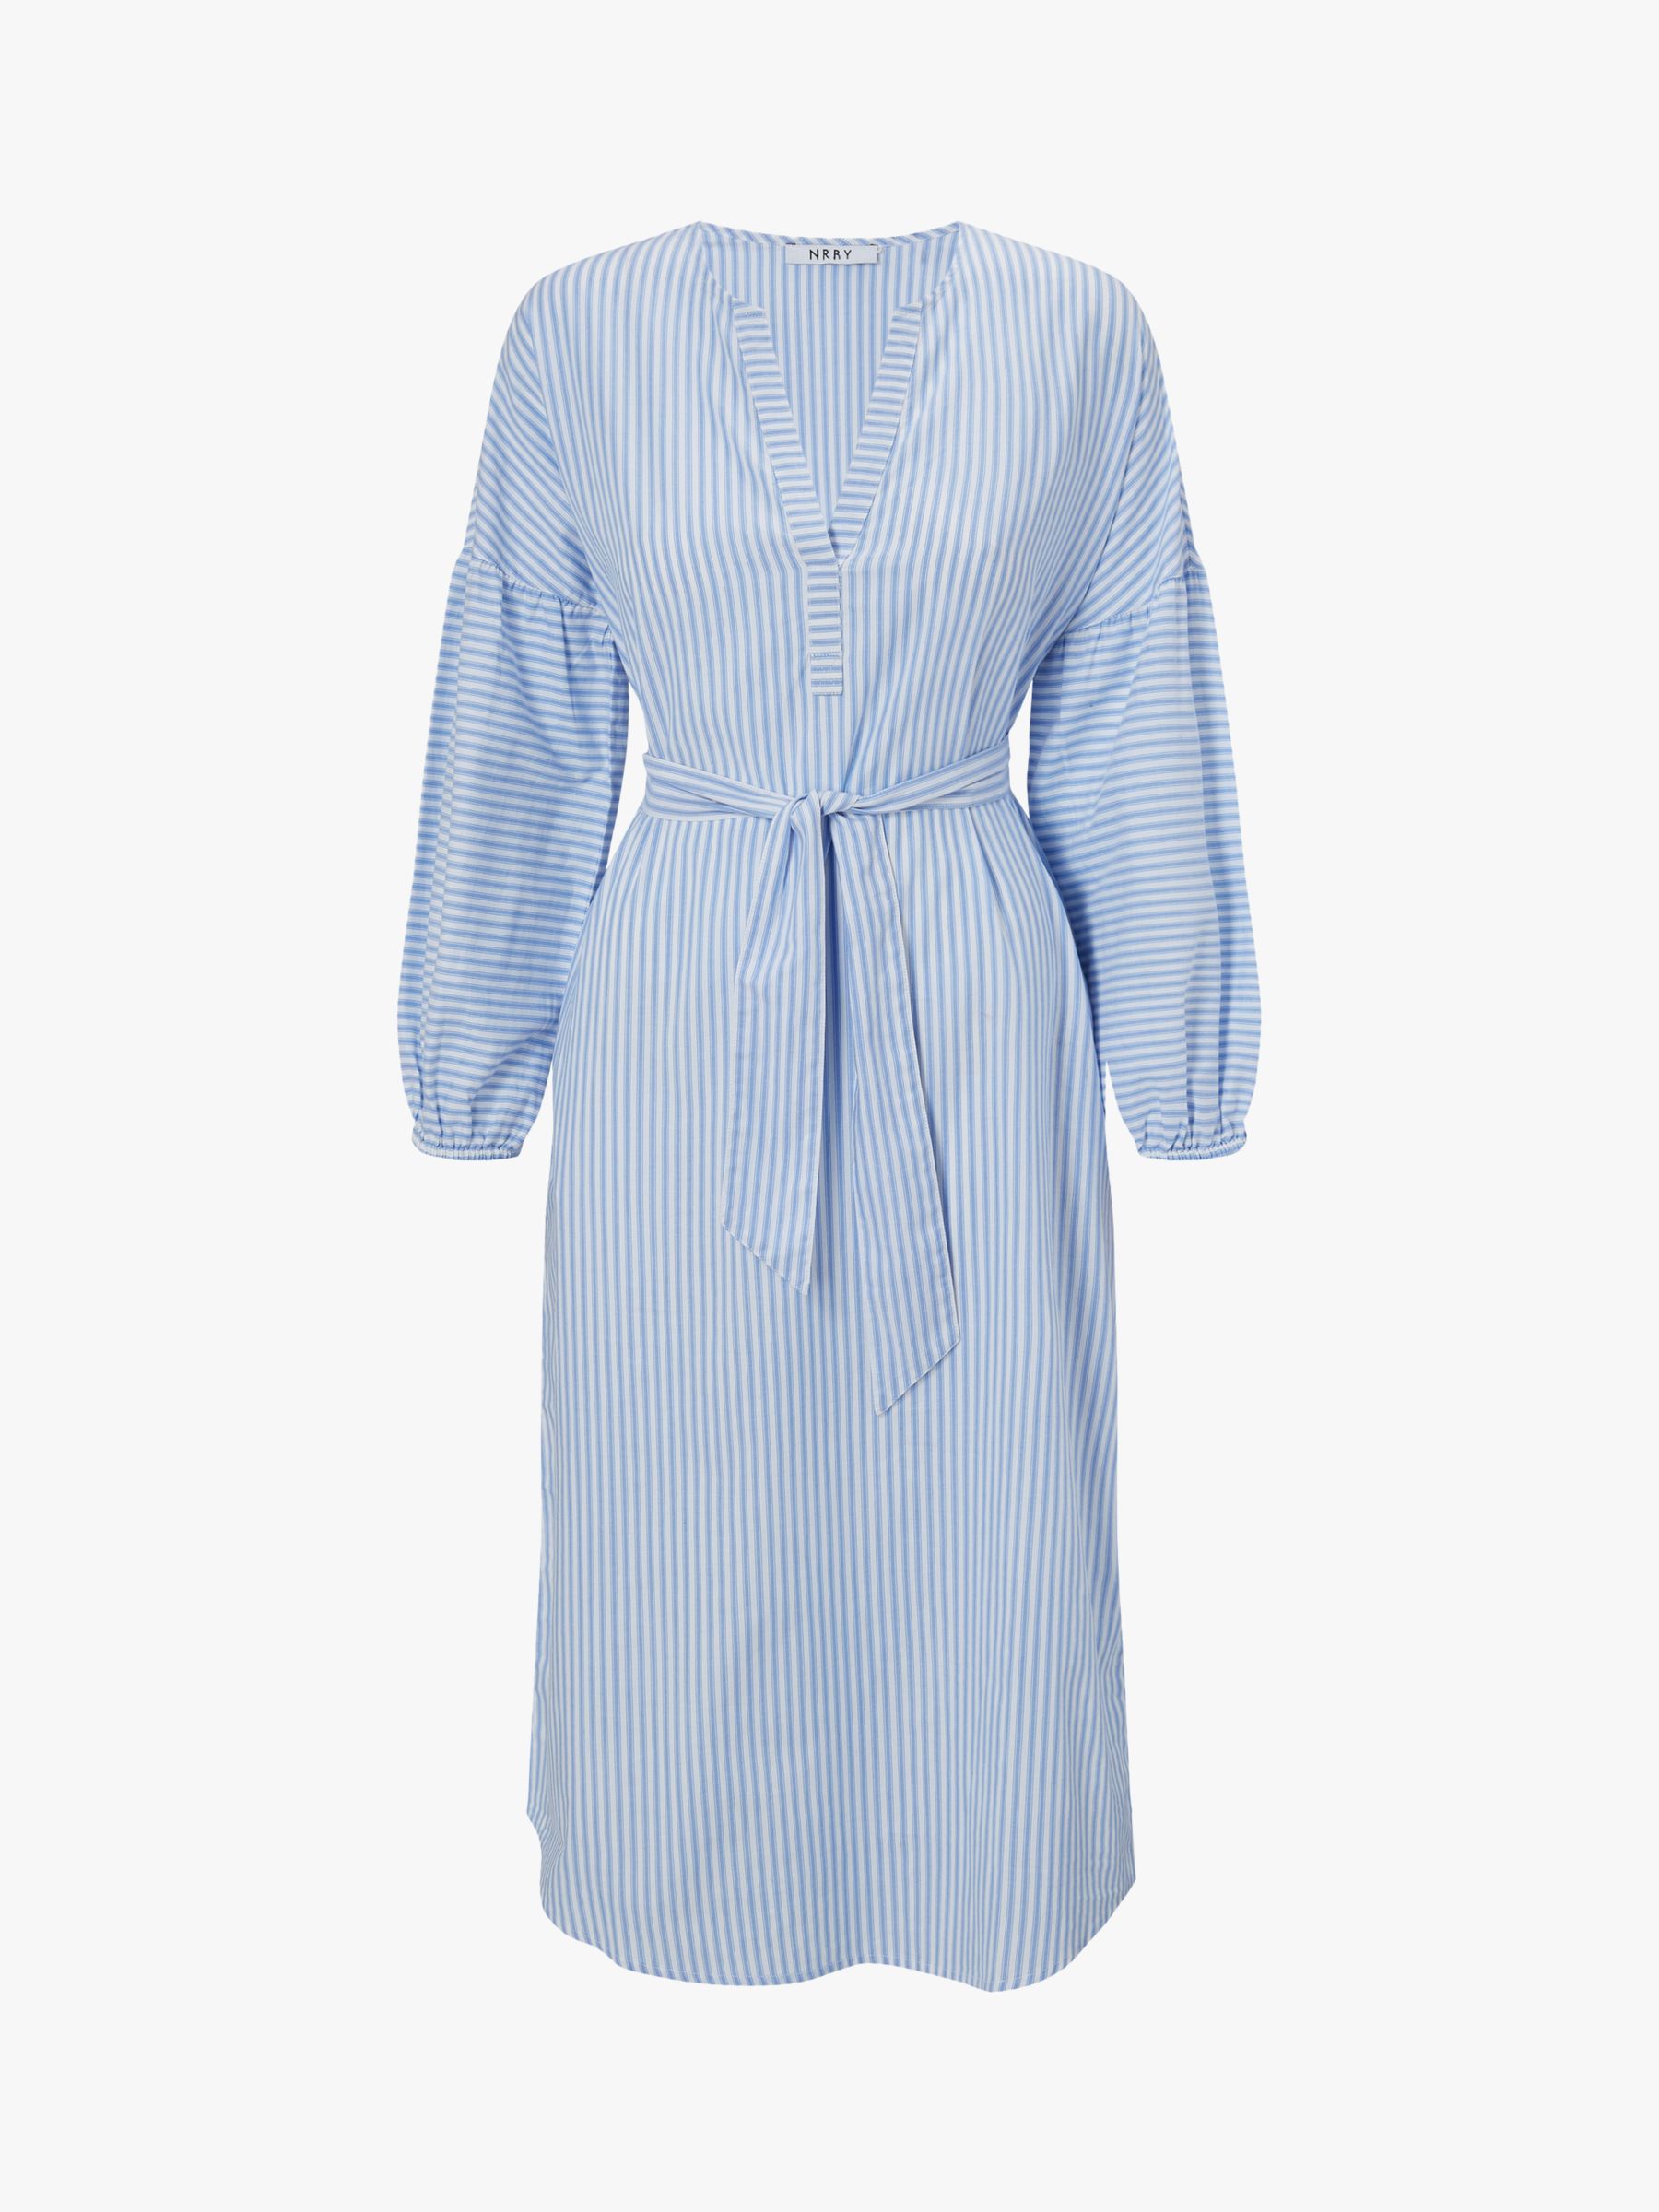 NRBY Clara Striped Cotton Maxi Dress, Blue/White